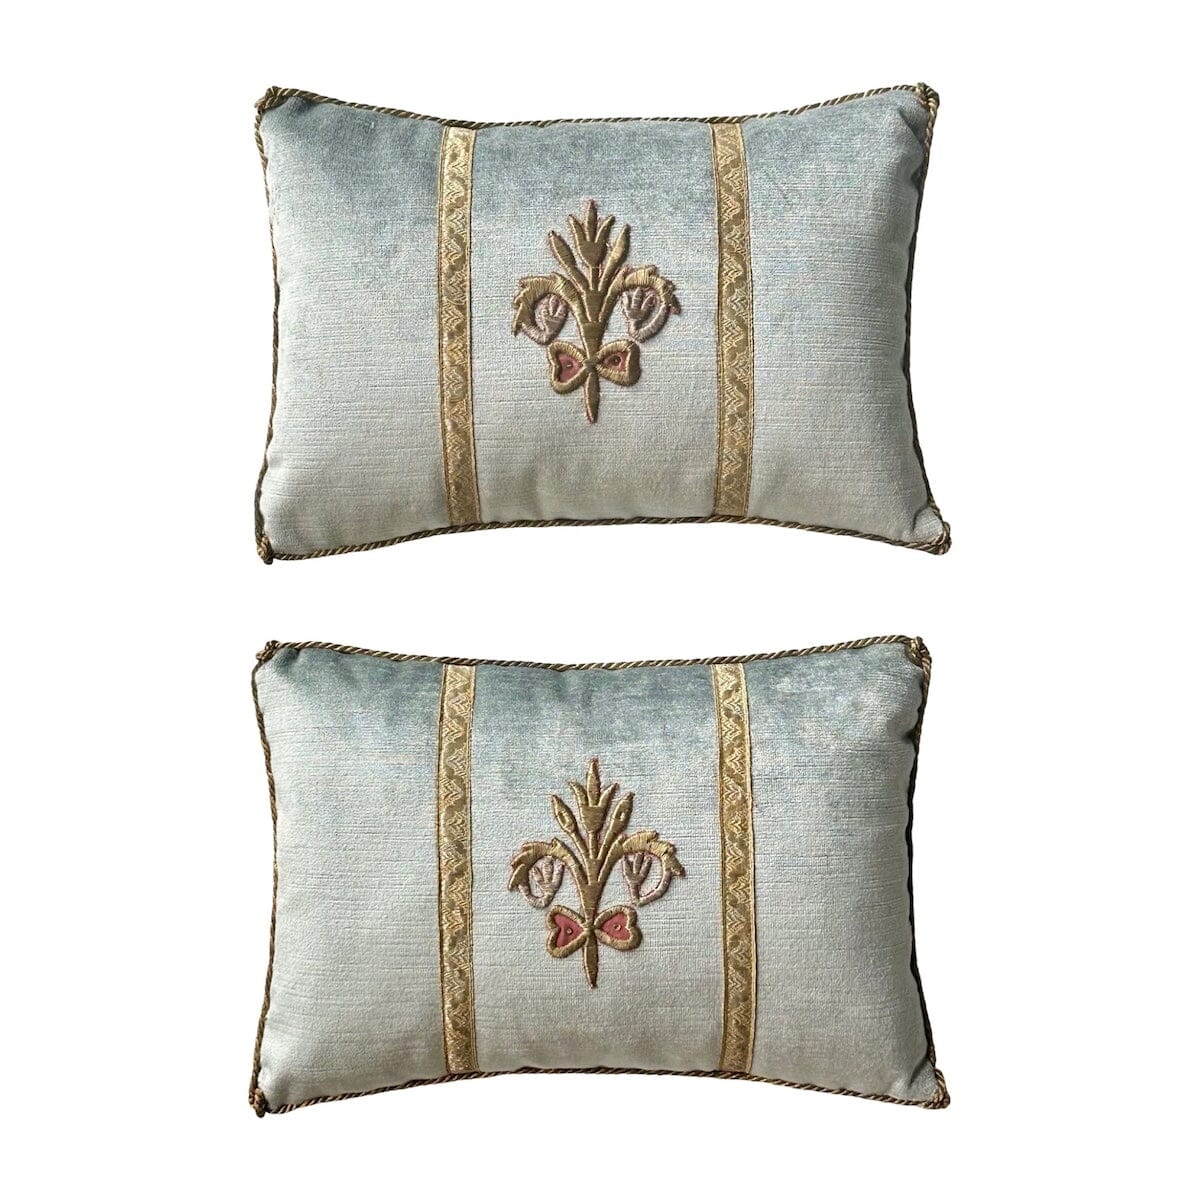 Antique Ottoman Empire Raised Silver and Gold Metallic Embroidery (#E050624A&B | 9 x 13") New Pillows B. Viz Design 